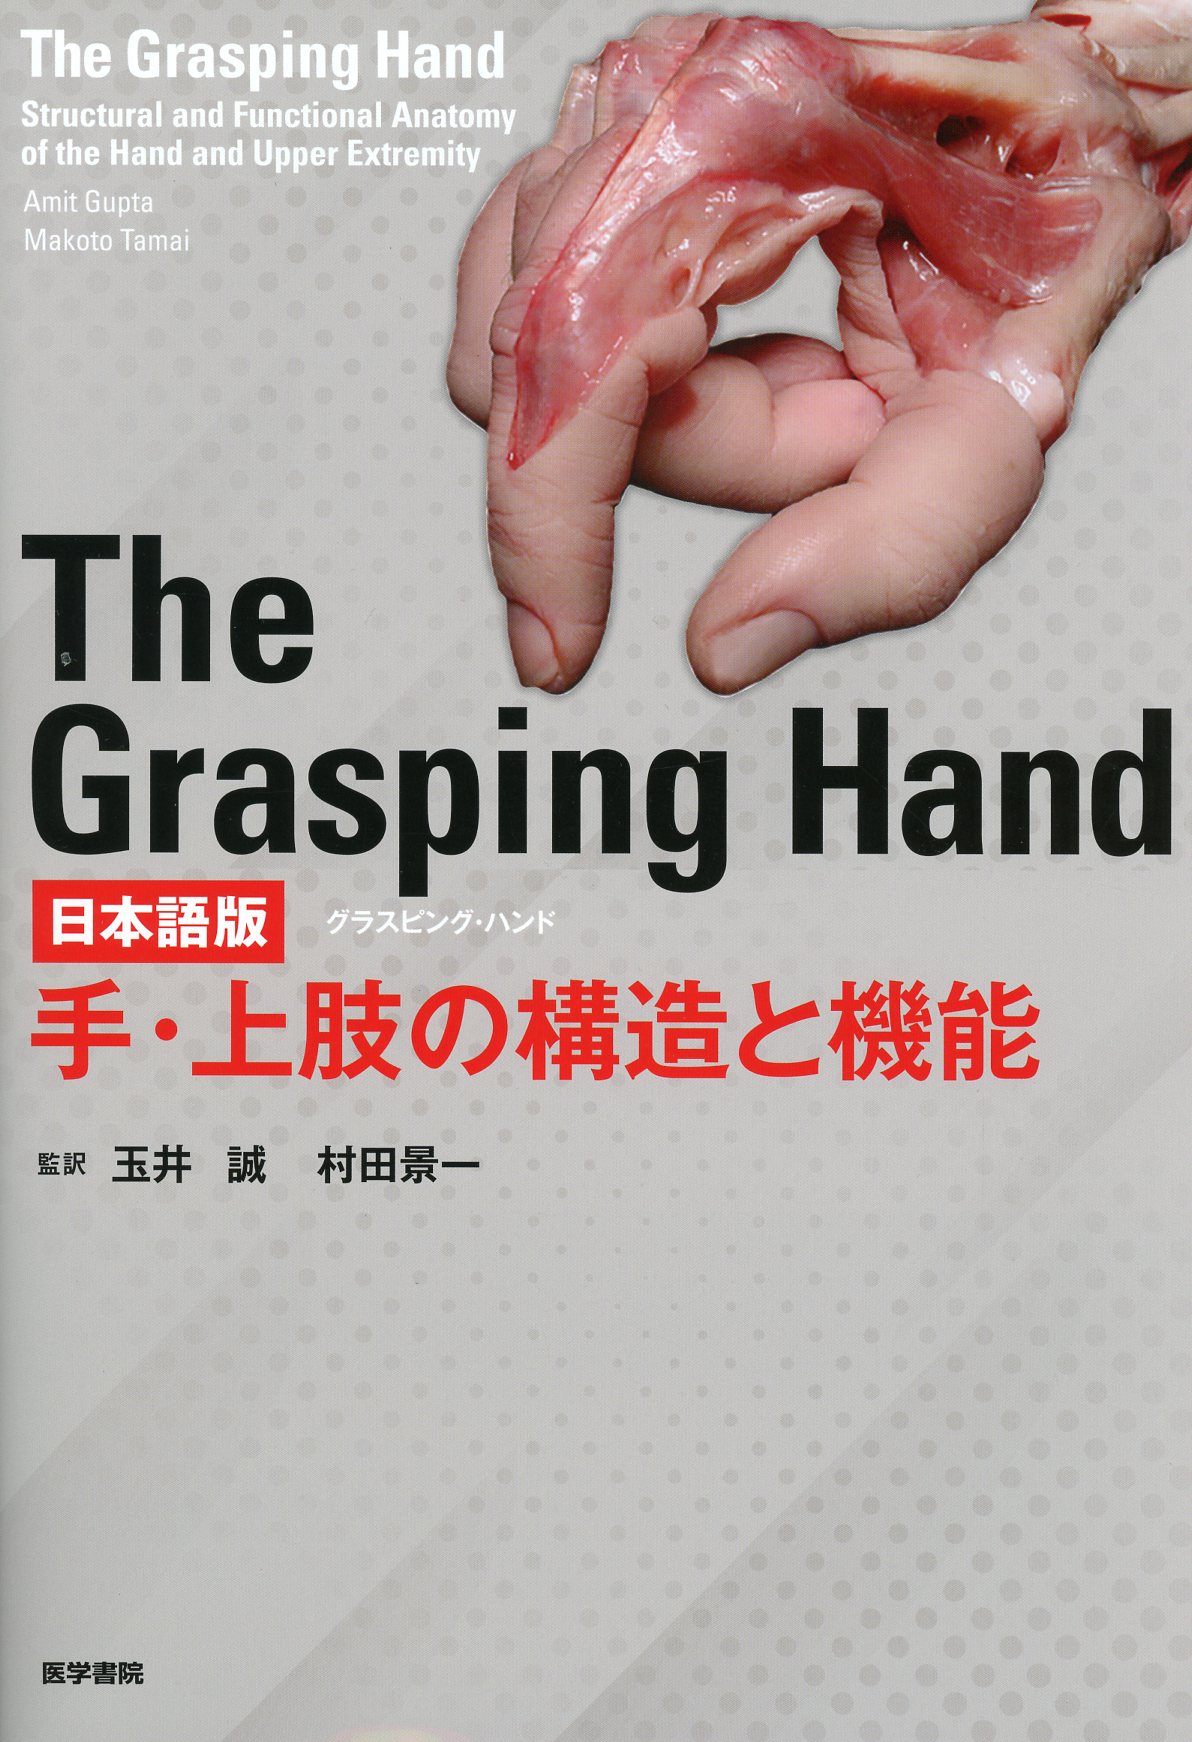 The Grasping Hand : 日本語版 : 手・上肢の構造と機能 - 健康・医学